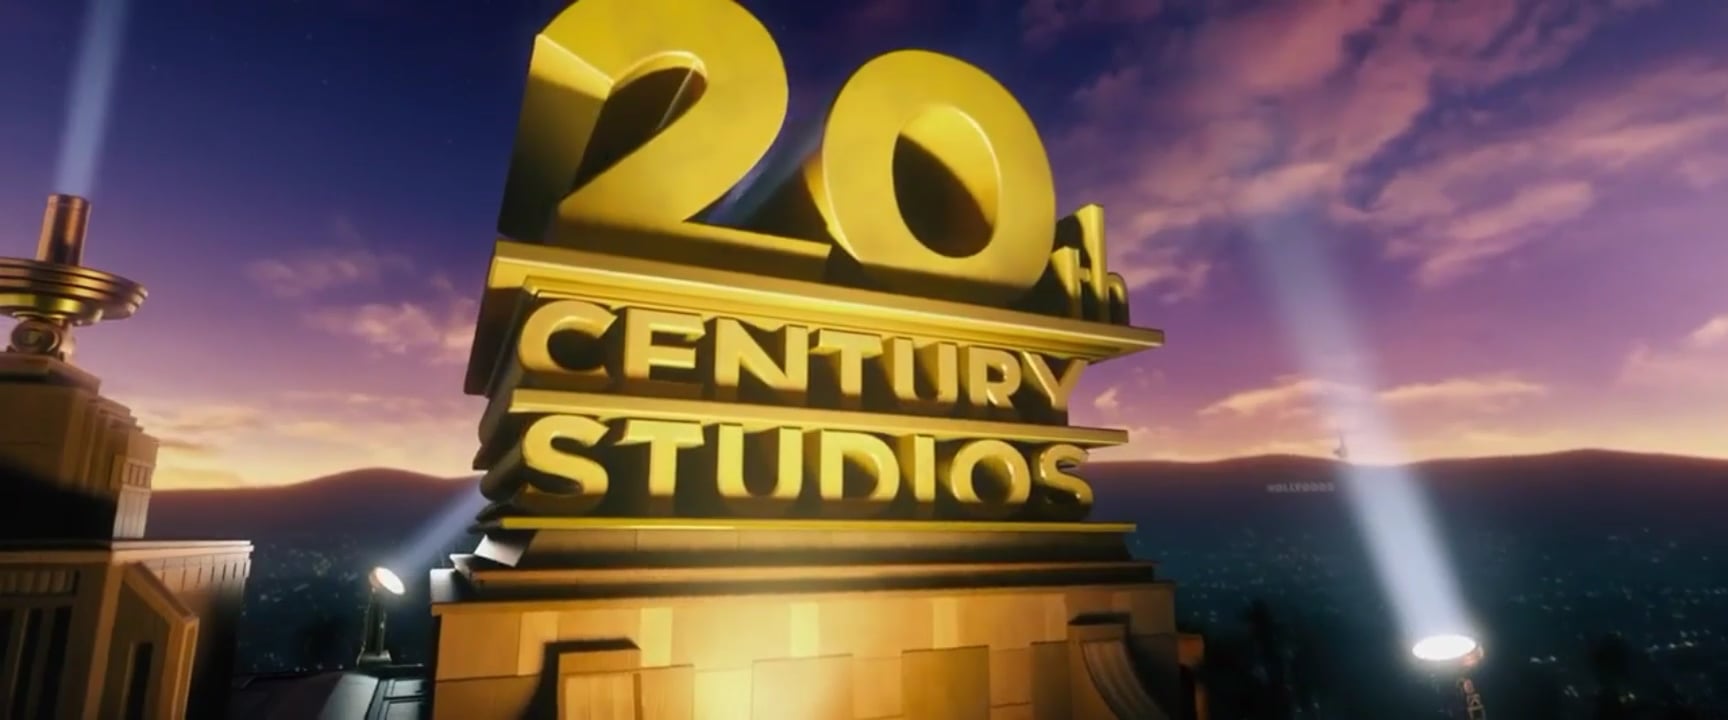 20th Century Studios Logo 2020 on Vimeo